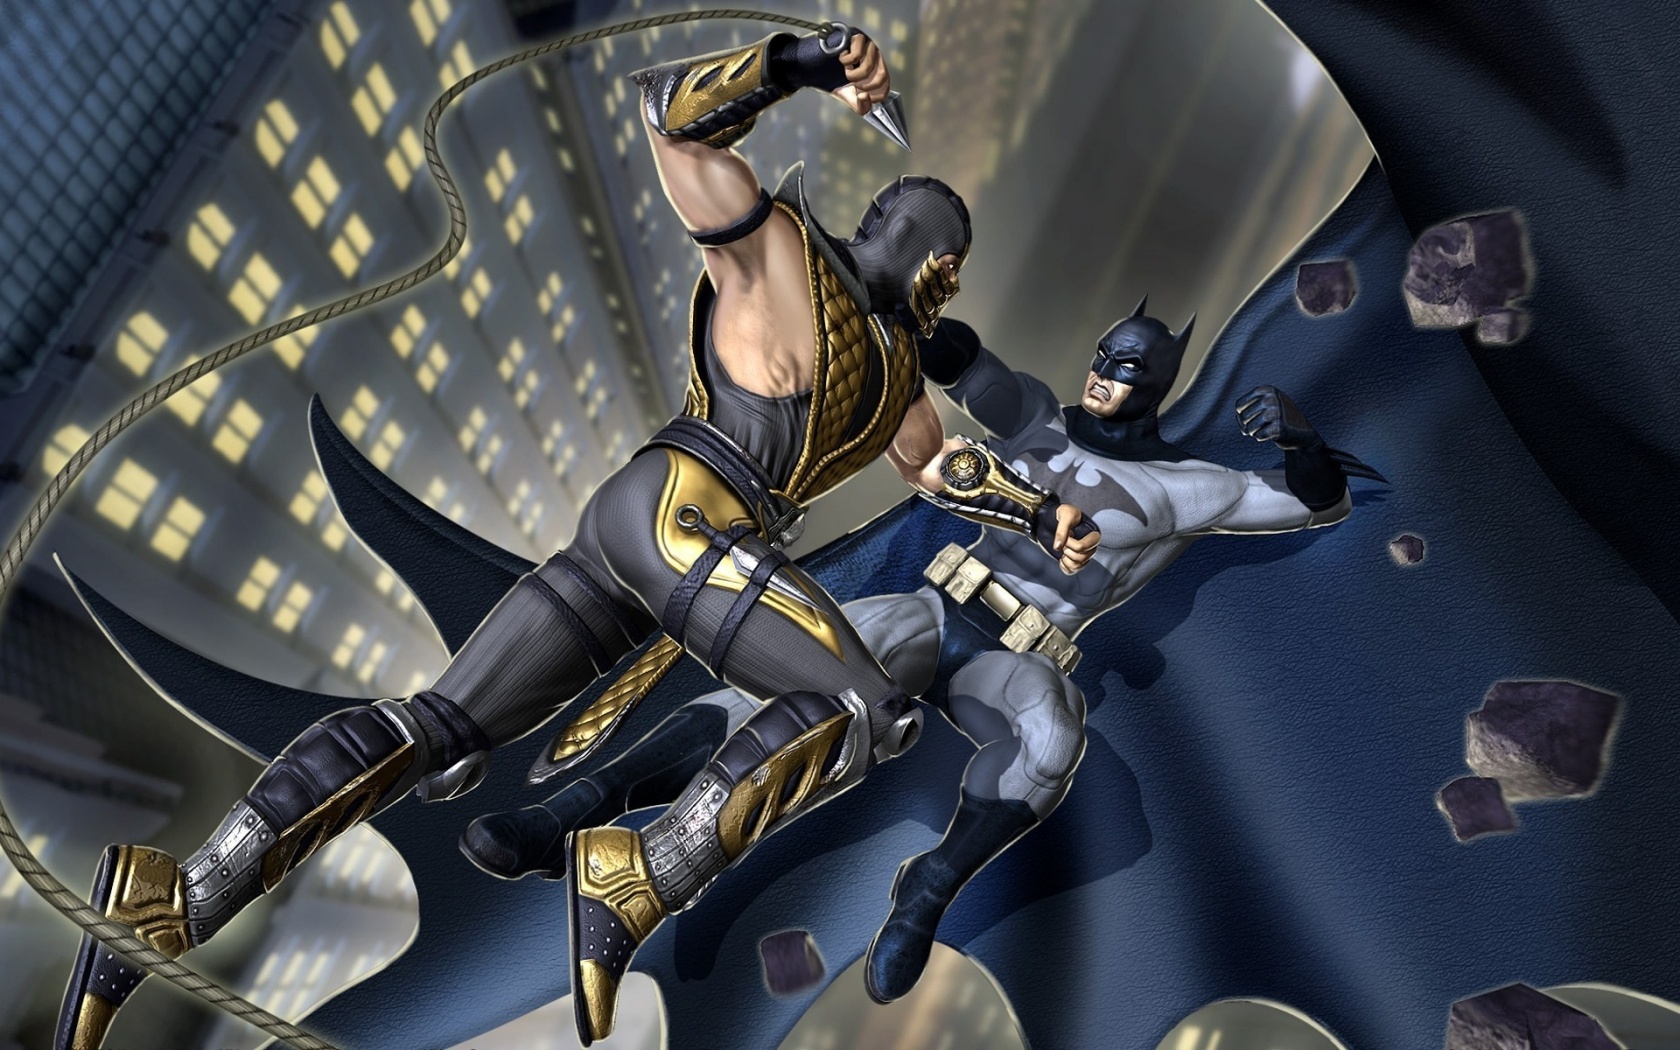 Scorpion Vs Batman - Injustice Games